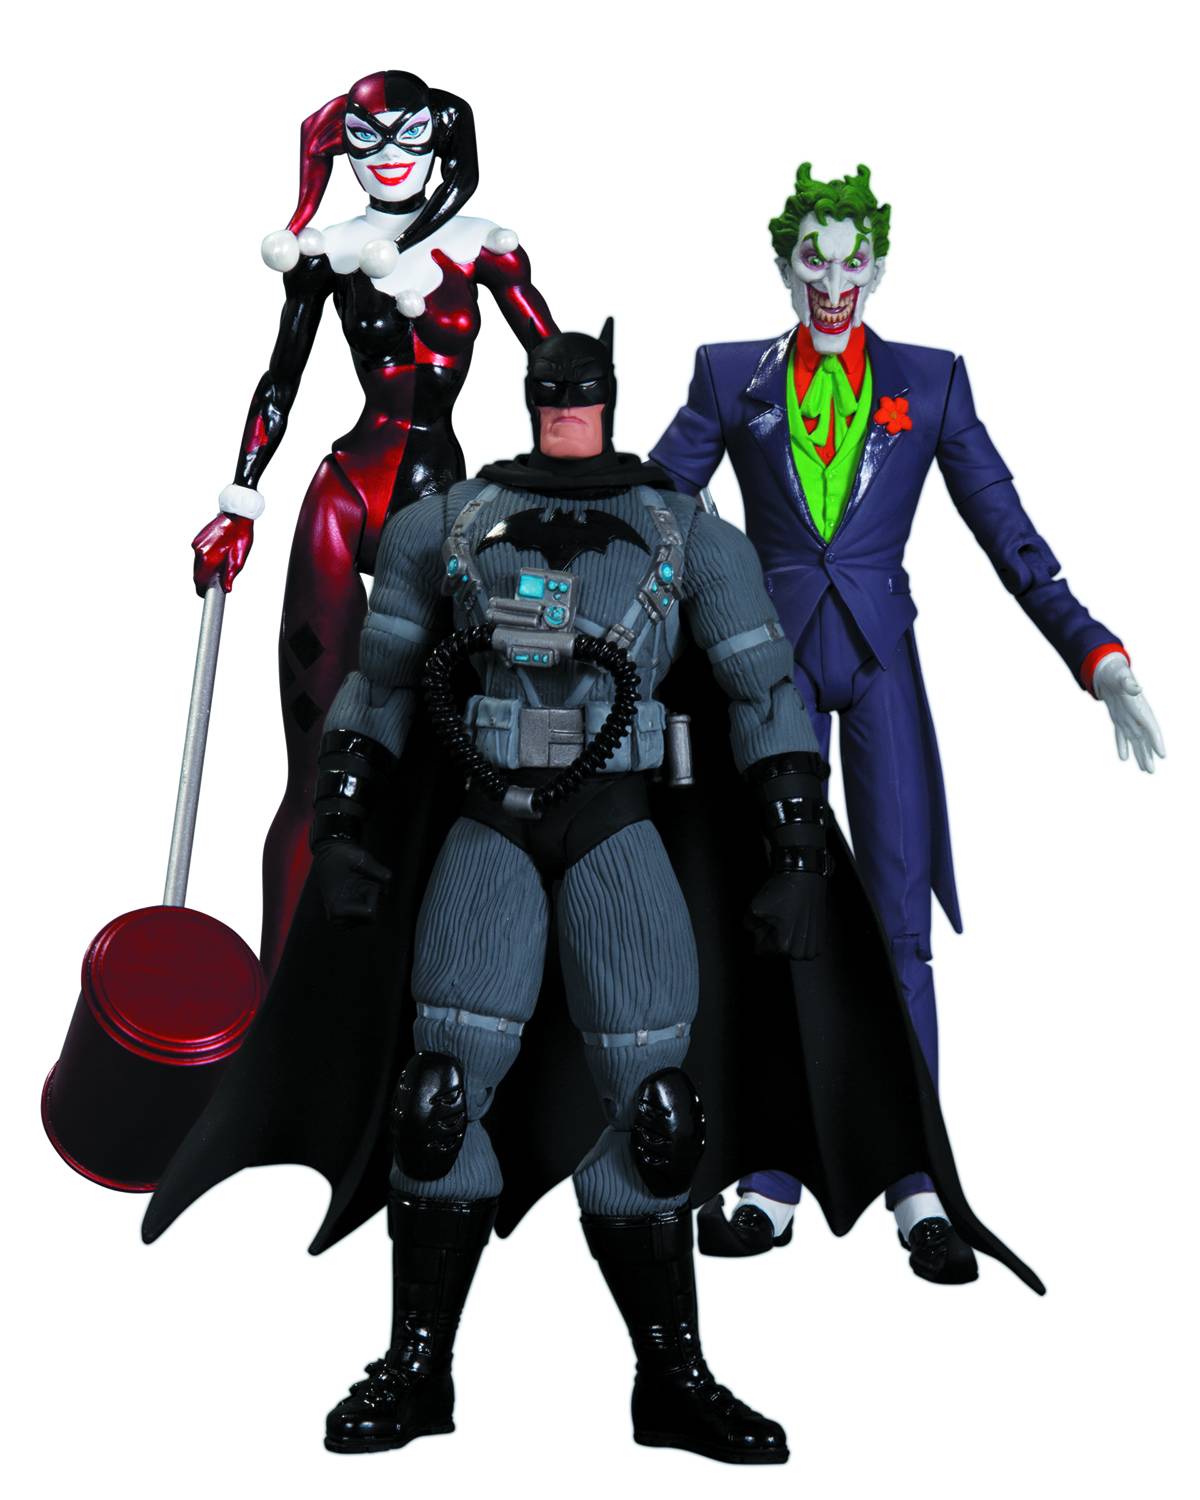 Hush Joker Harley Stealth Batman Action Figure 3 Pack